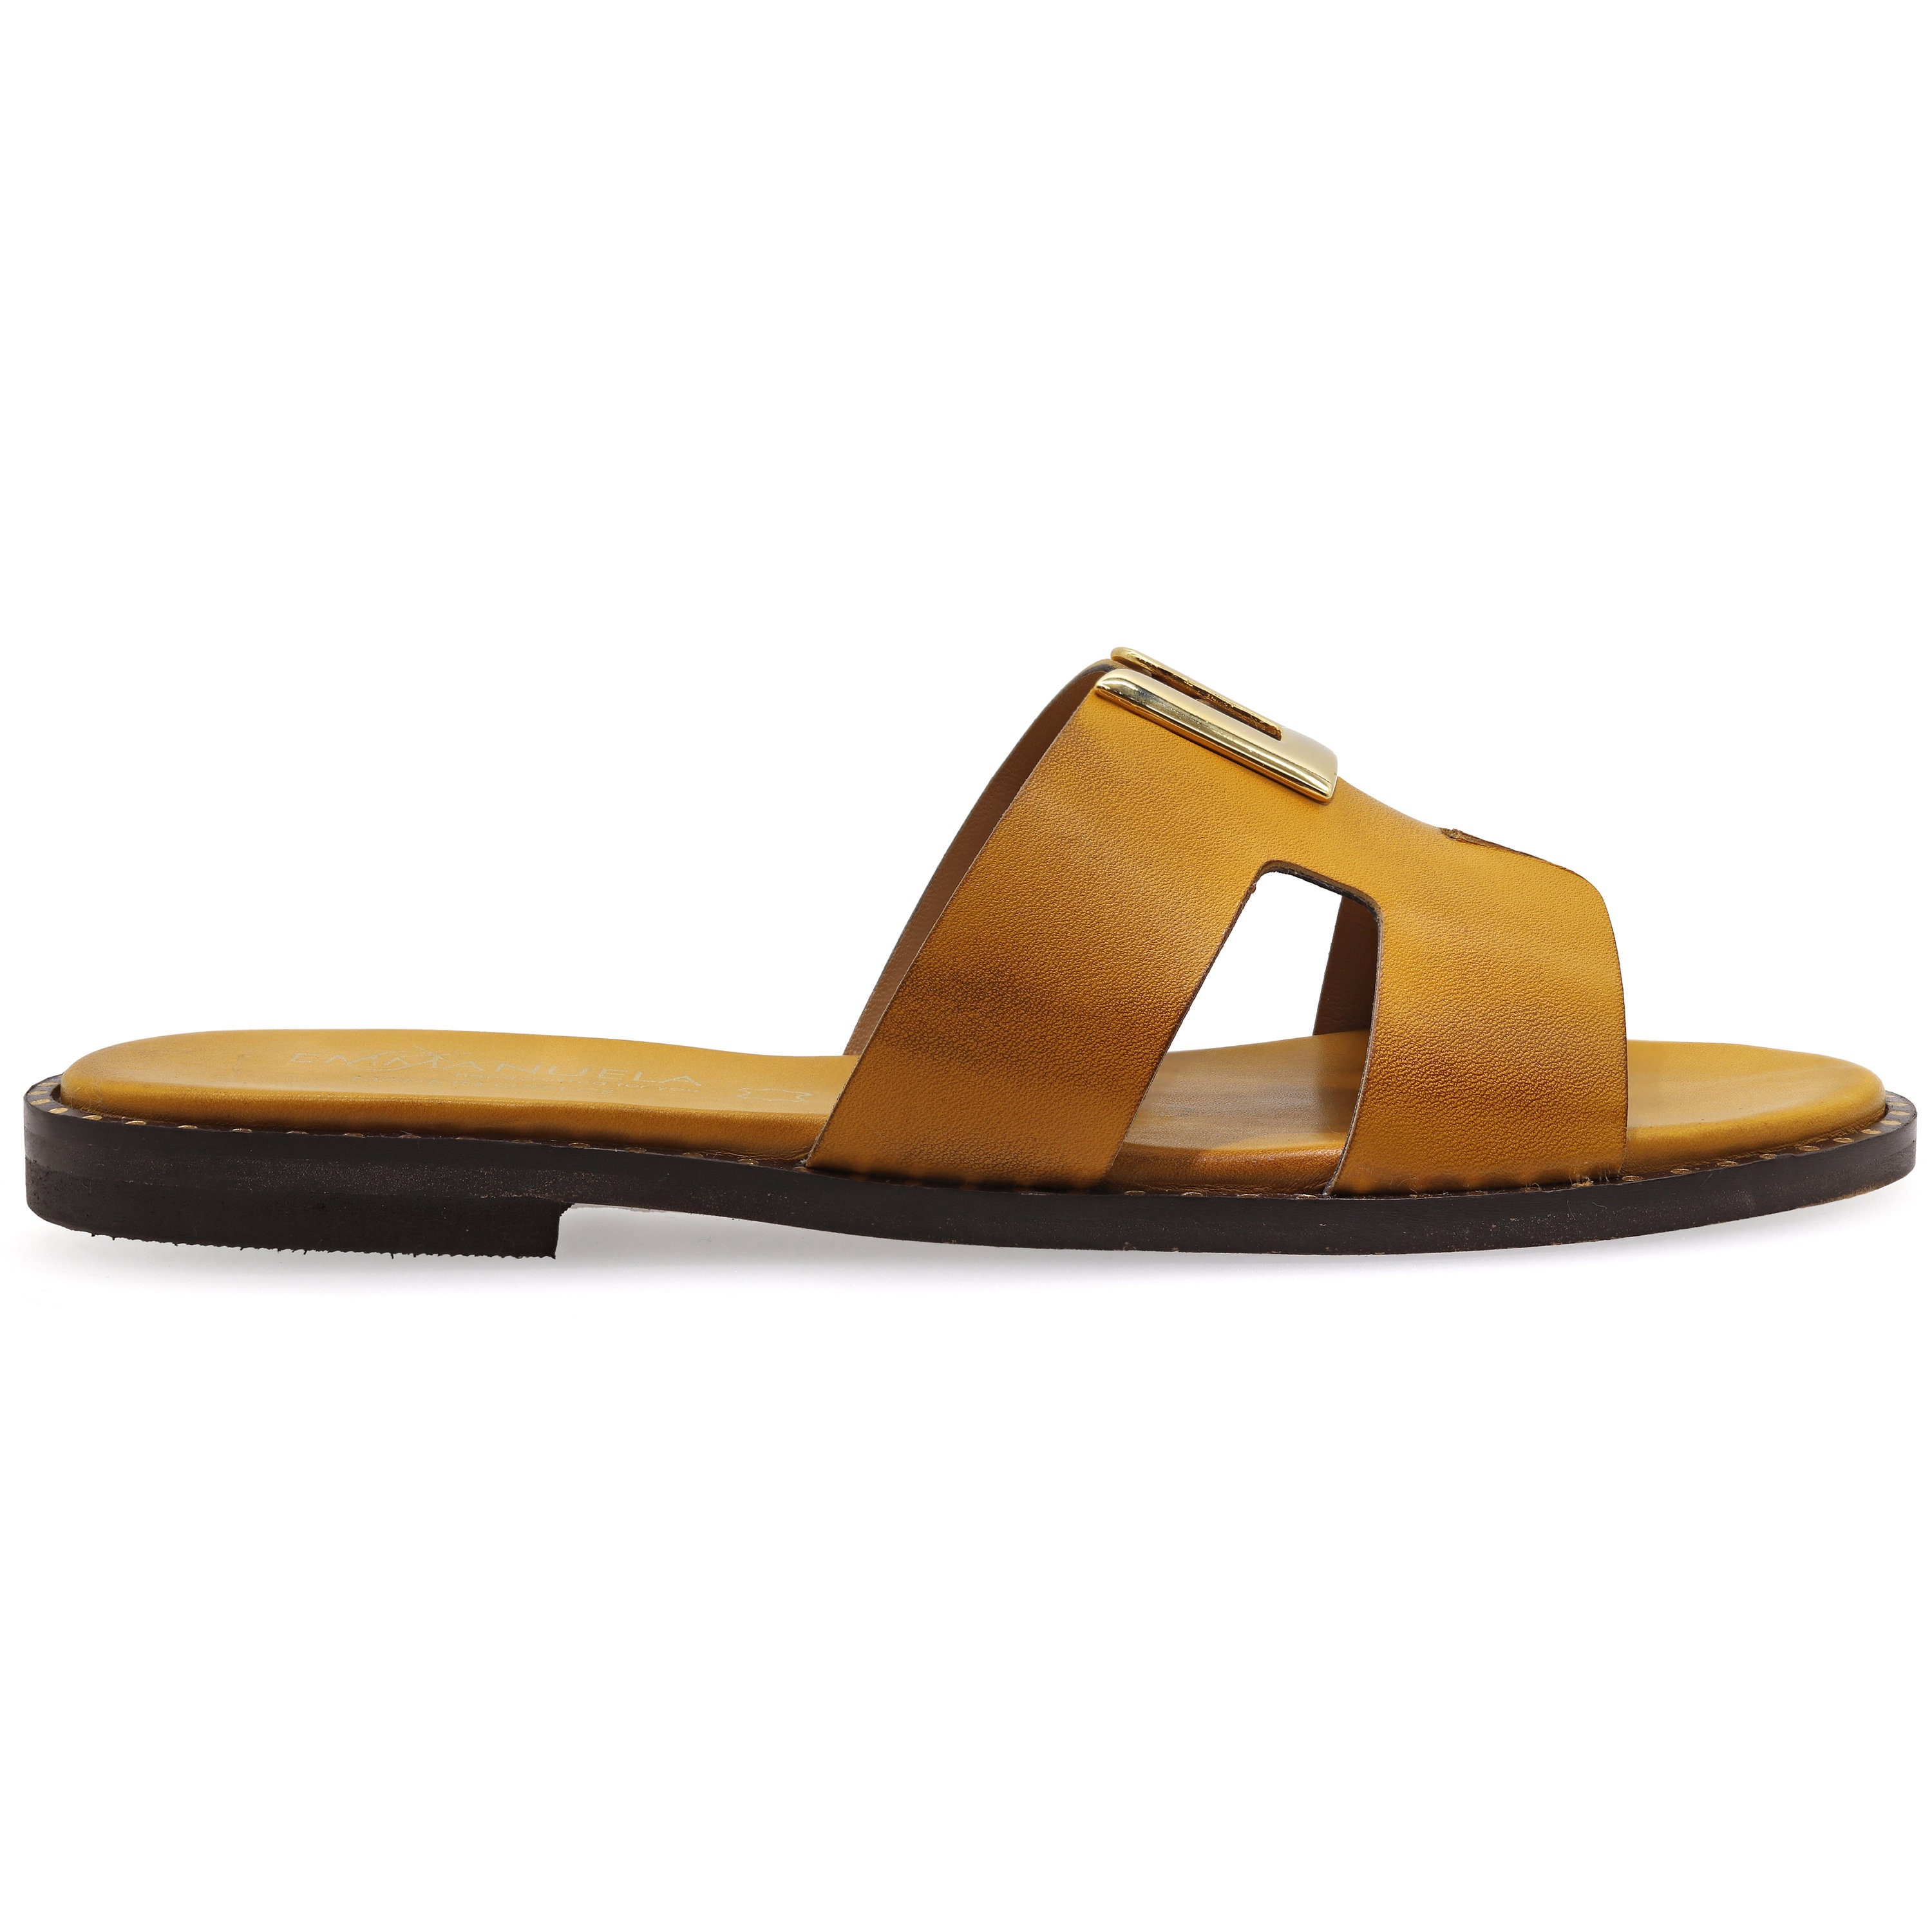 Mustard Yellow Leather H Sandals Classy Greek Sandals Slide | Etsy